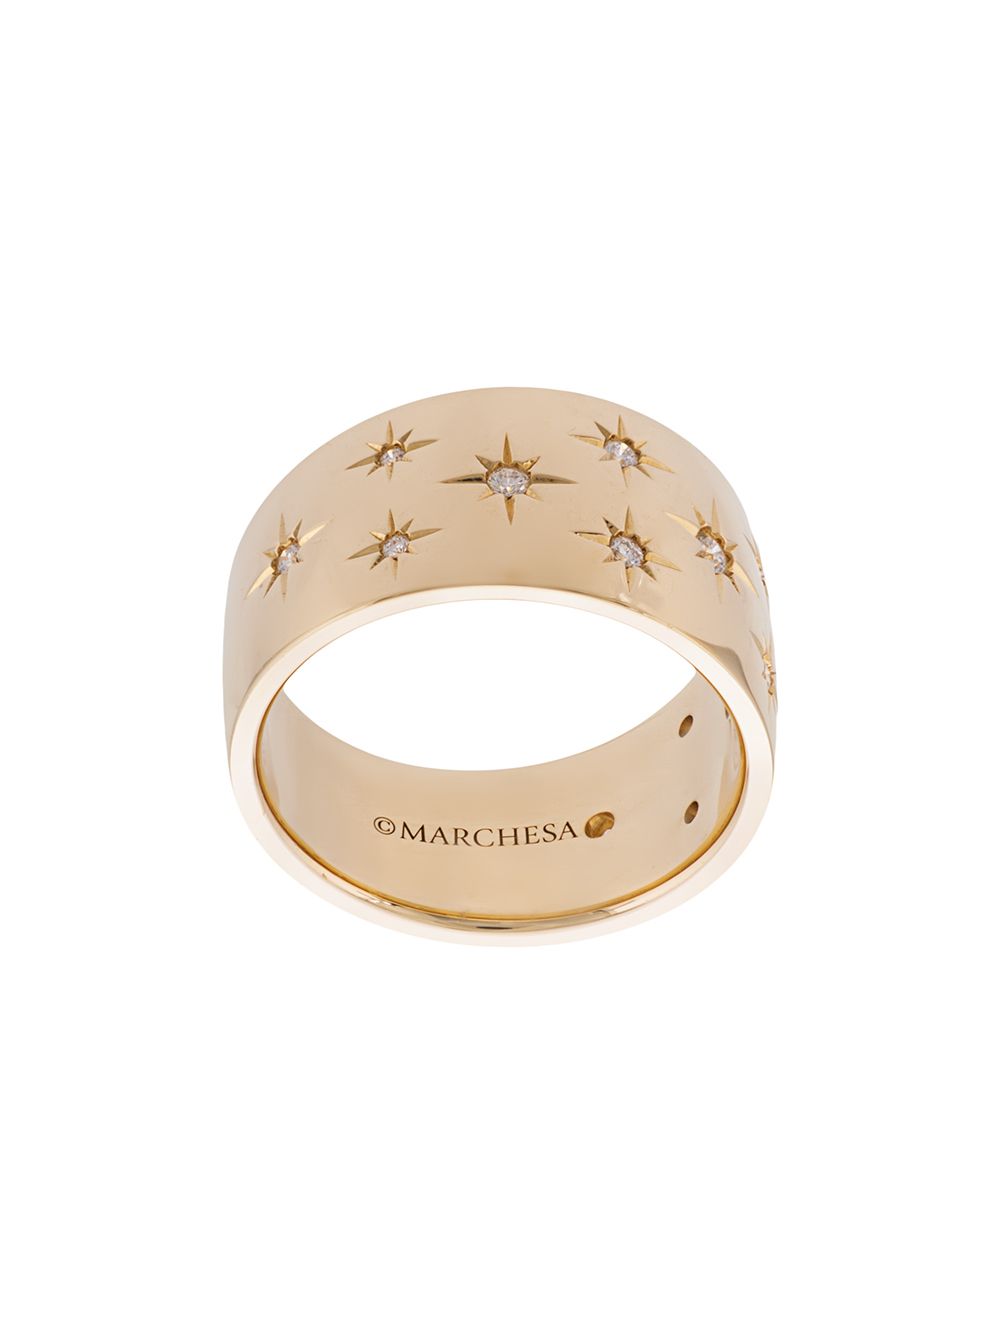 фото Marchesa широкое золотое кольцо star с бриллиантами